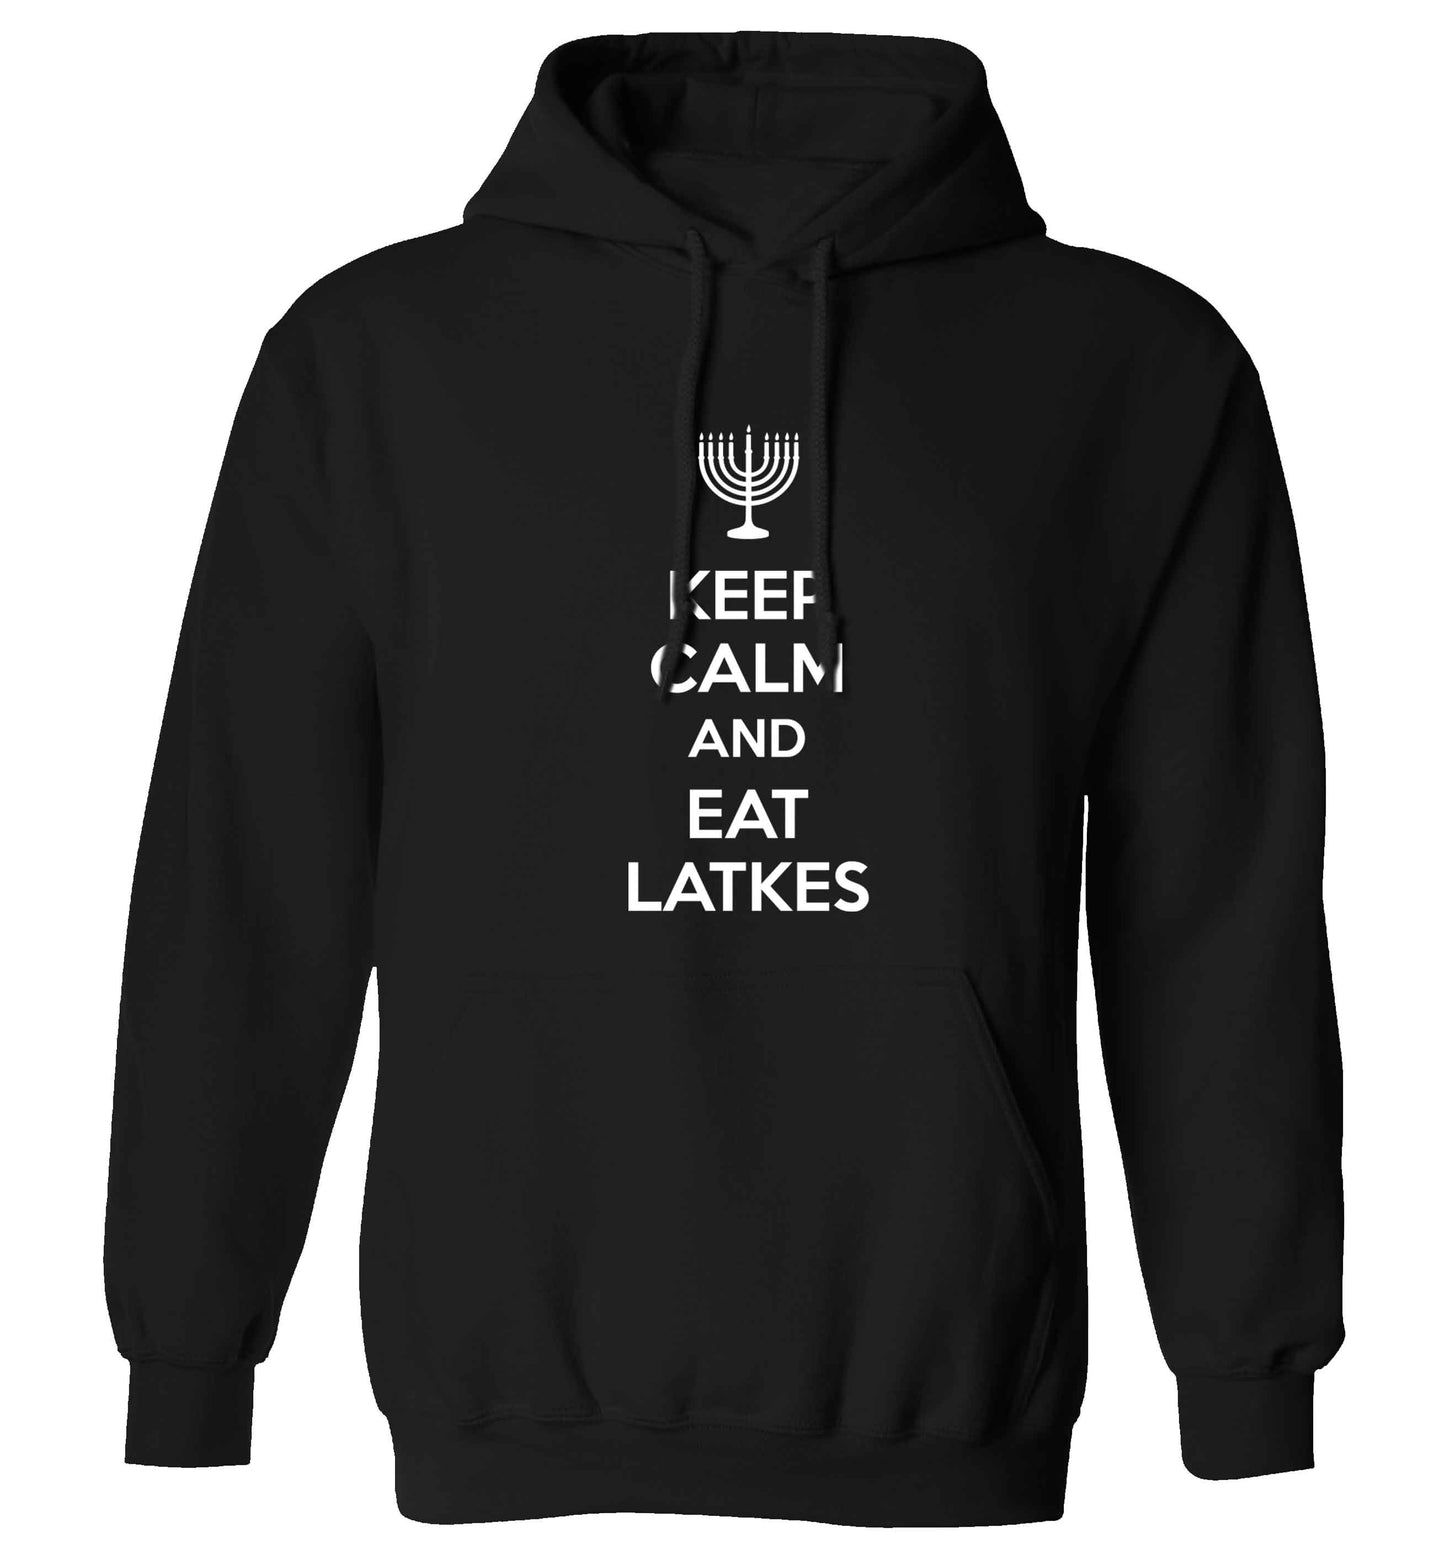 Keep calm and eat latkes adults unisex black hoodie 2XL